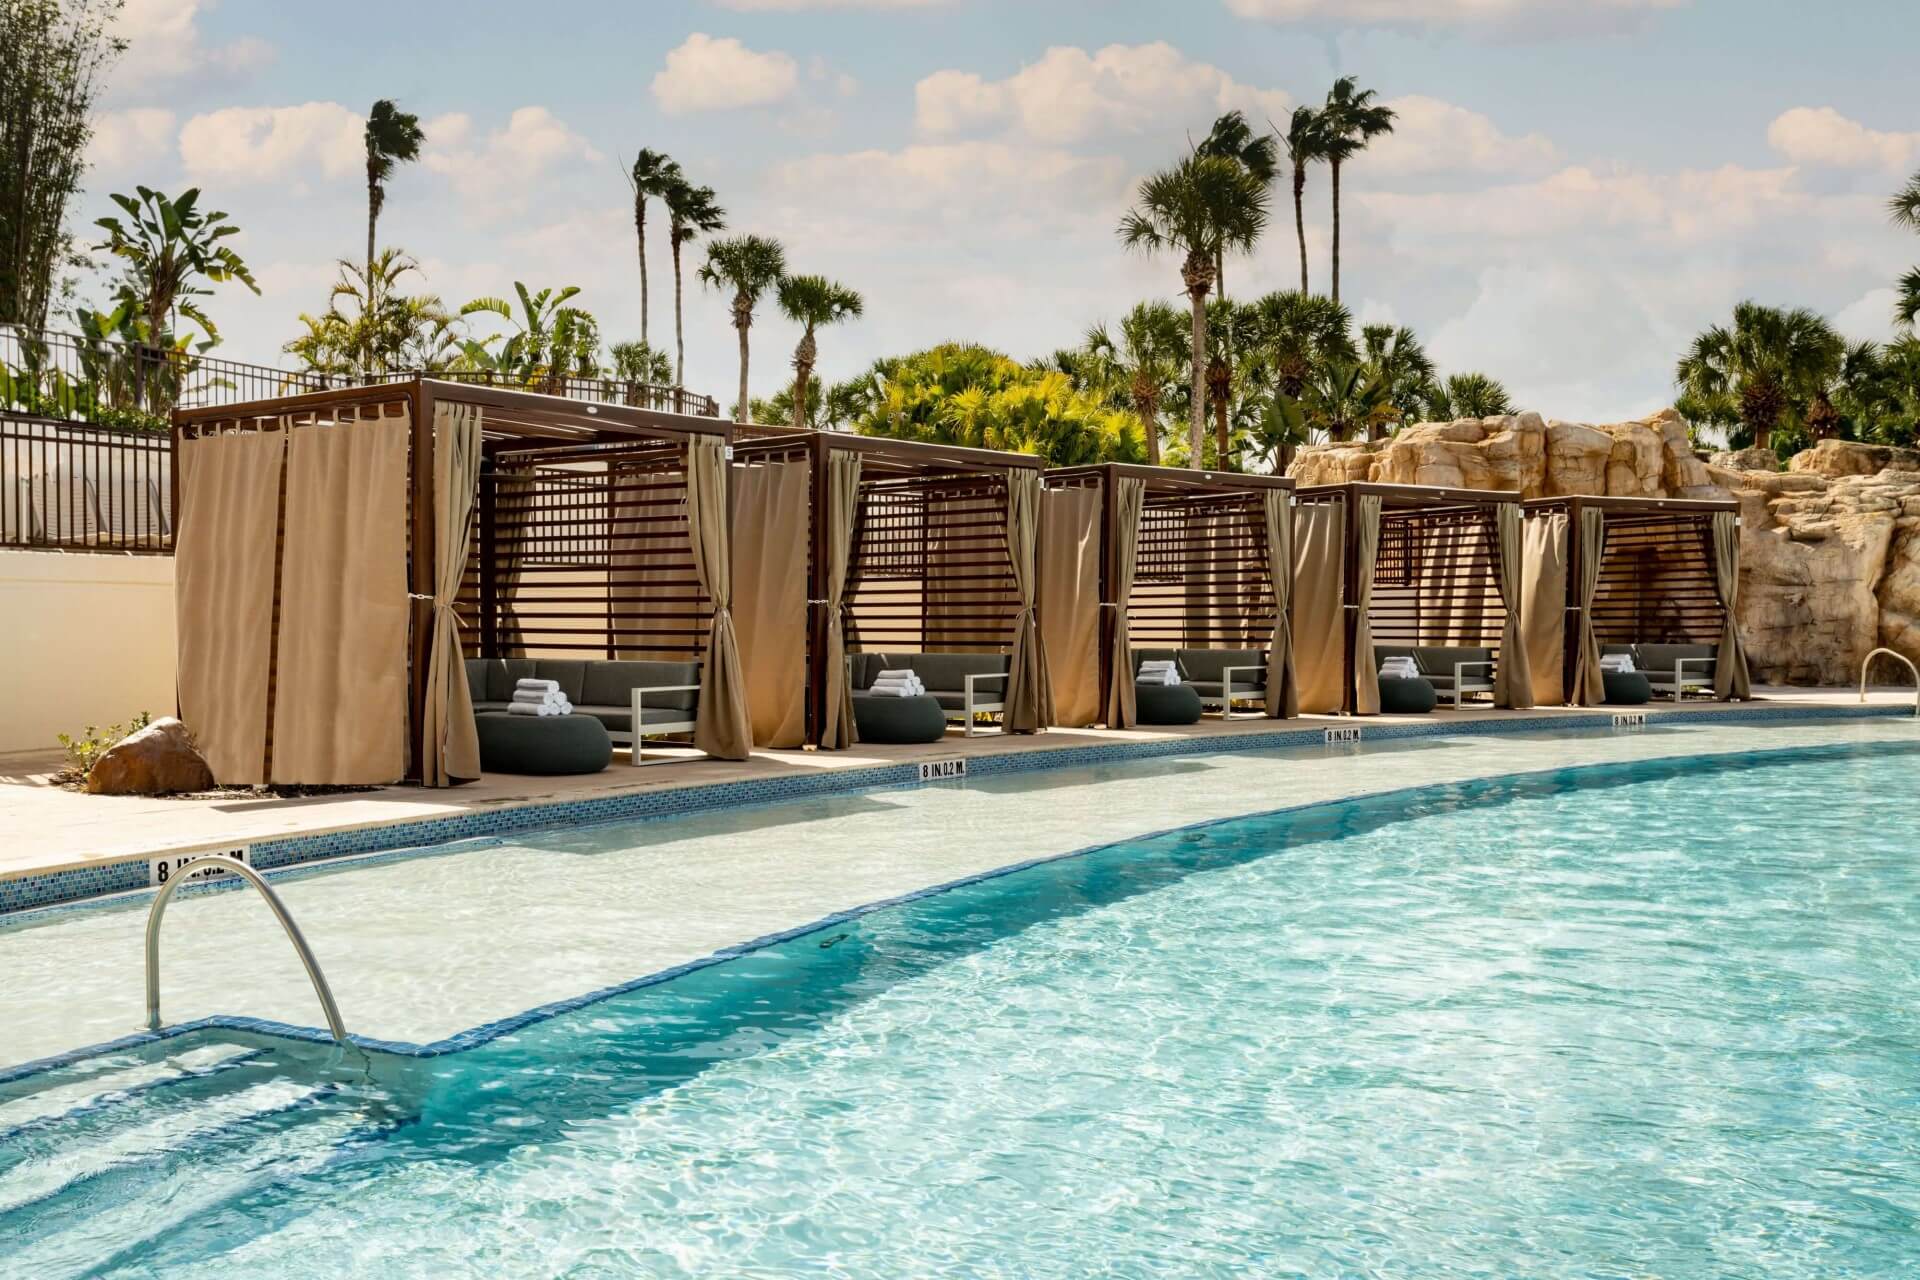 Orlando World Center Marriott Falls Oasis Pool cabanas